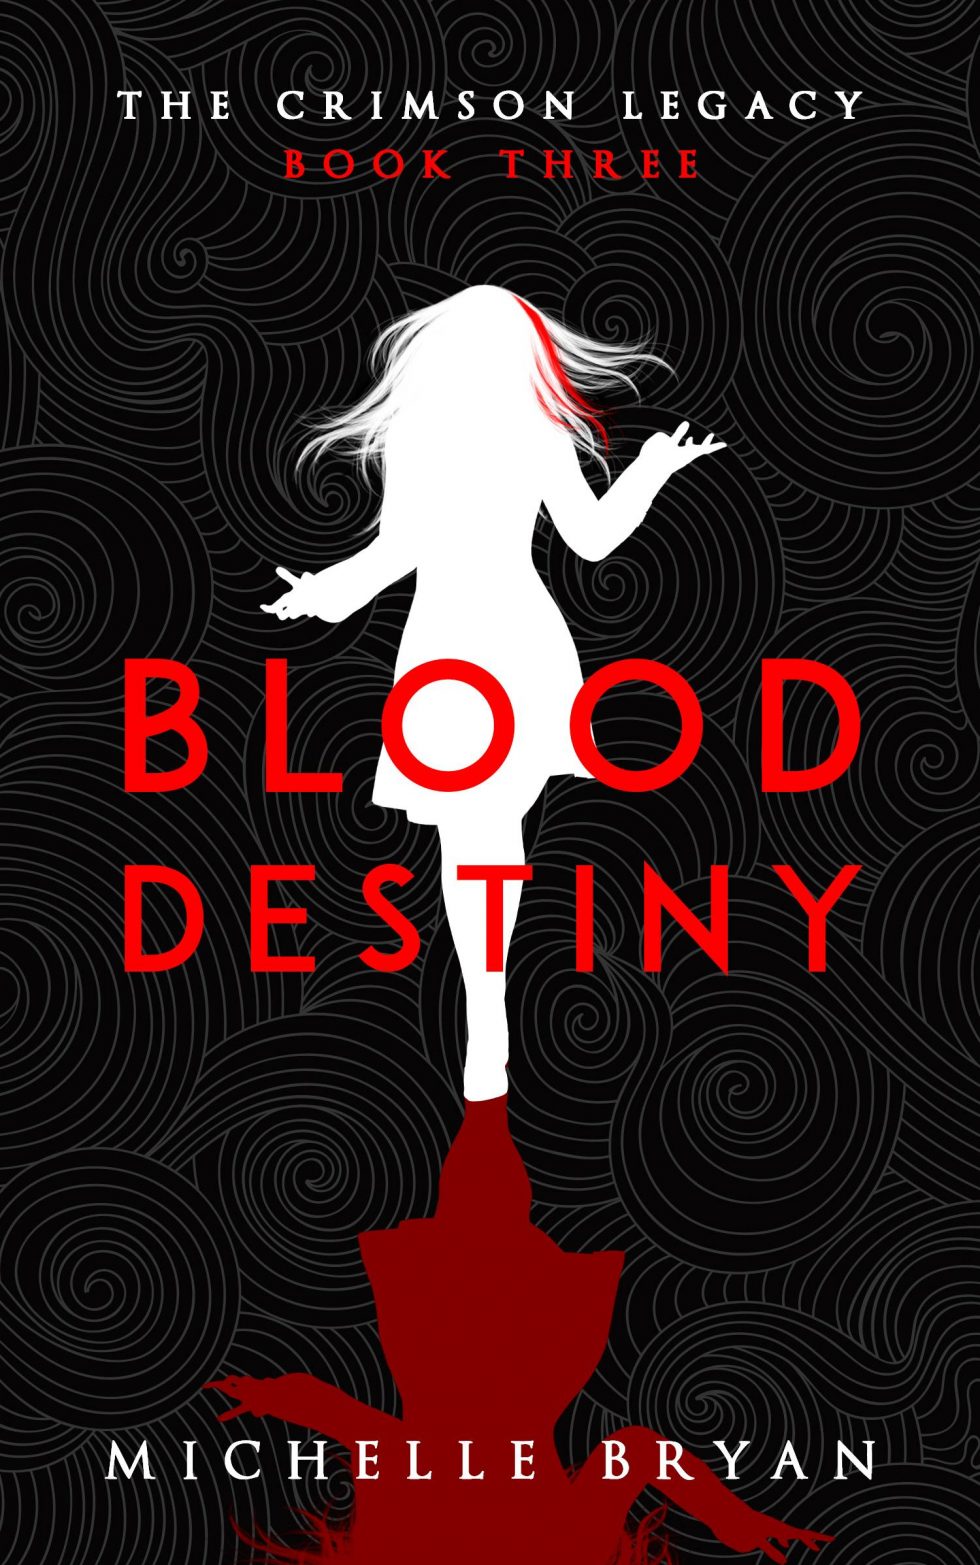 The Dark Bloods by Destiny Hawkins